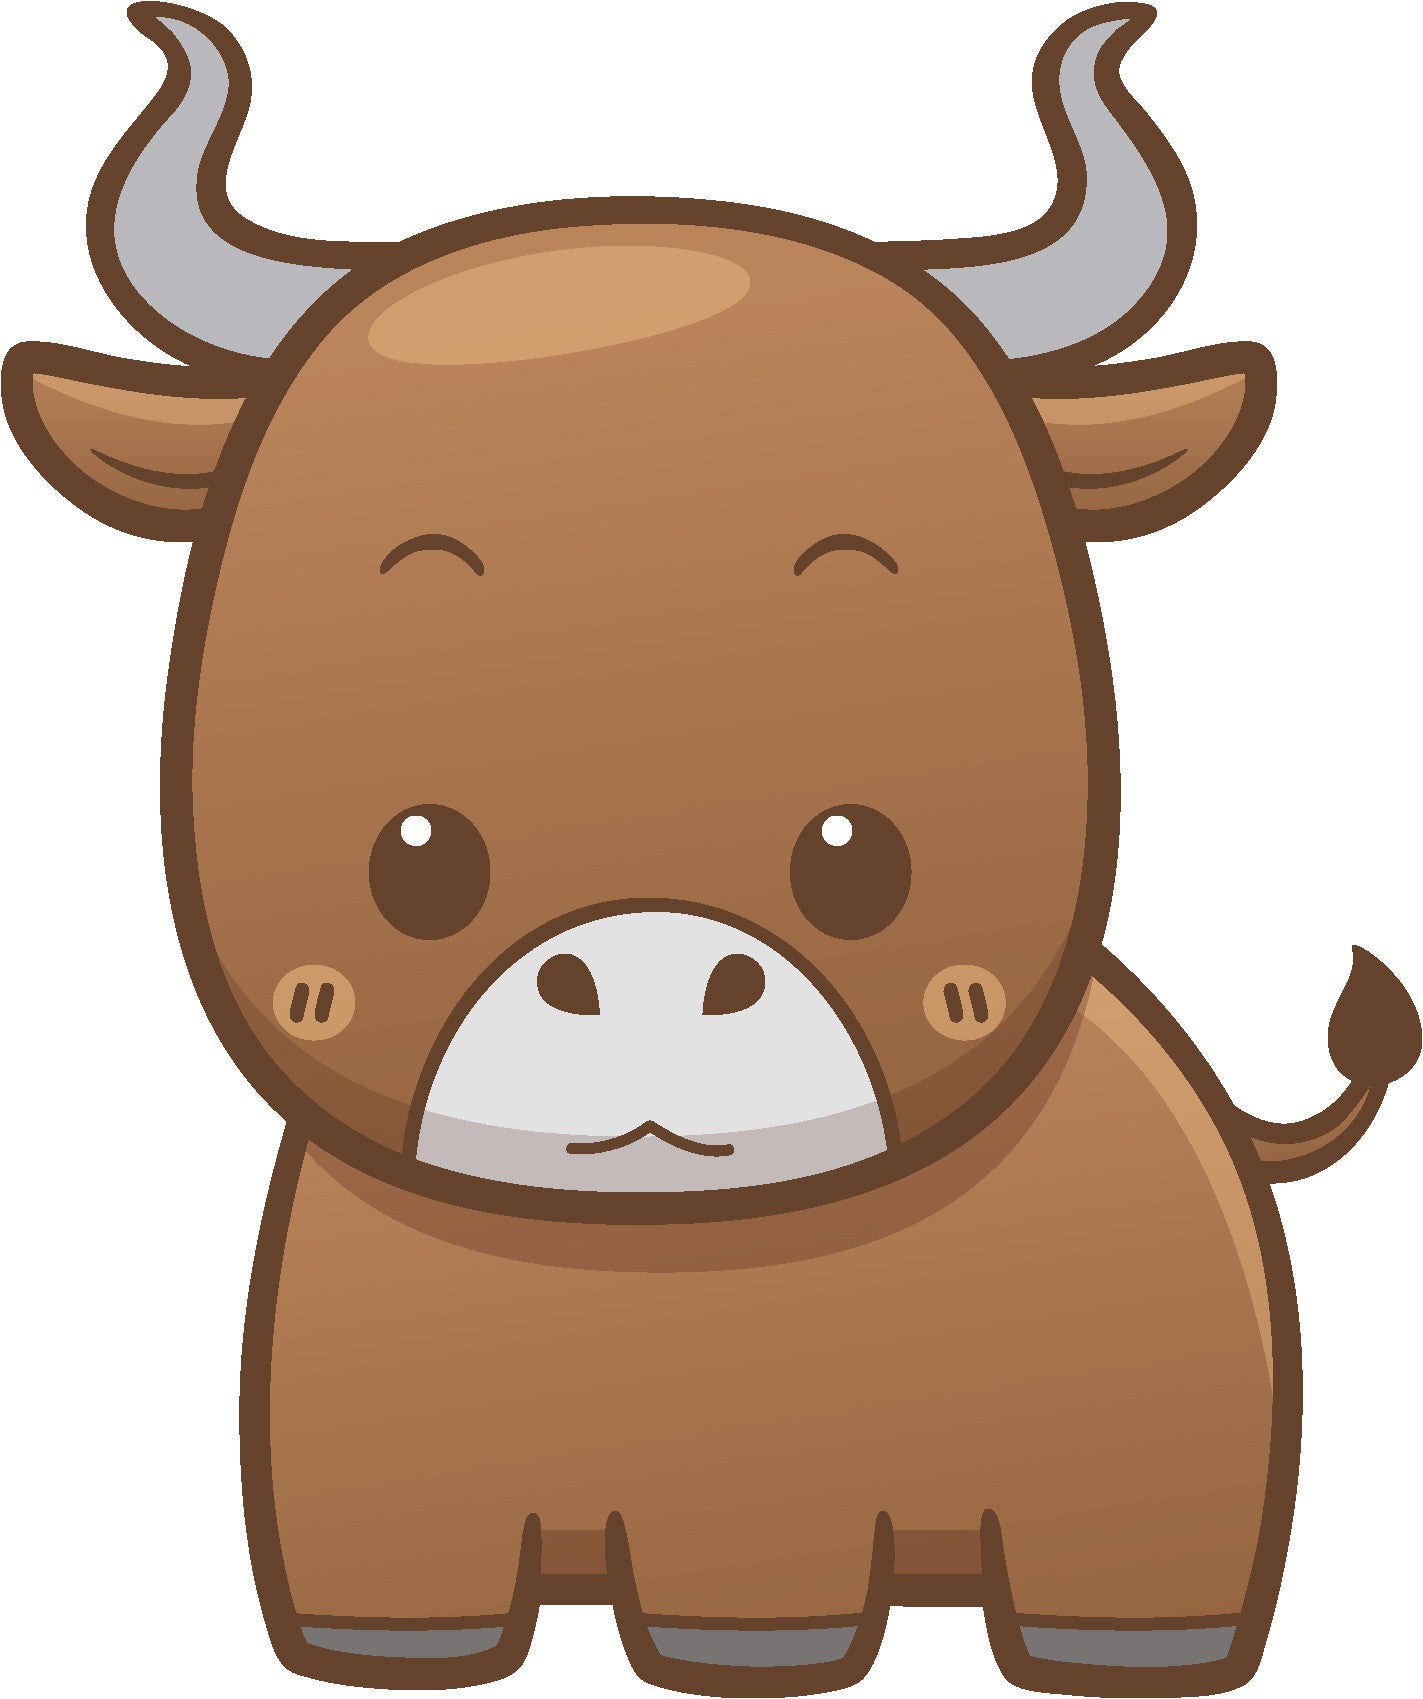 Cute Simple Kawaii Zoo Animal Cartoon Icon - Bull Vinyl Decal Sticker